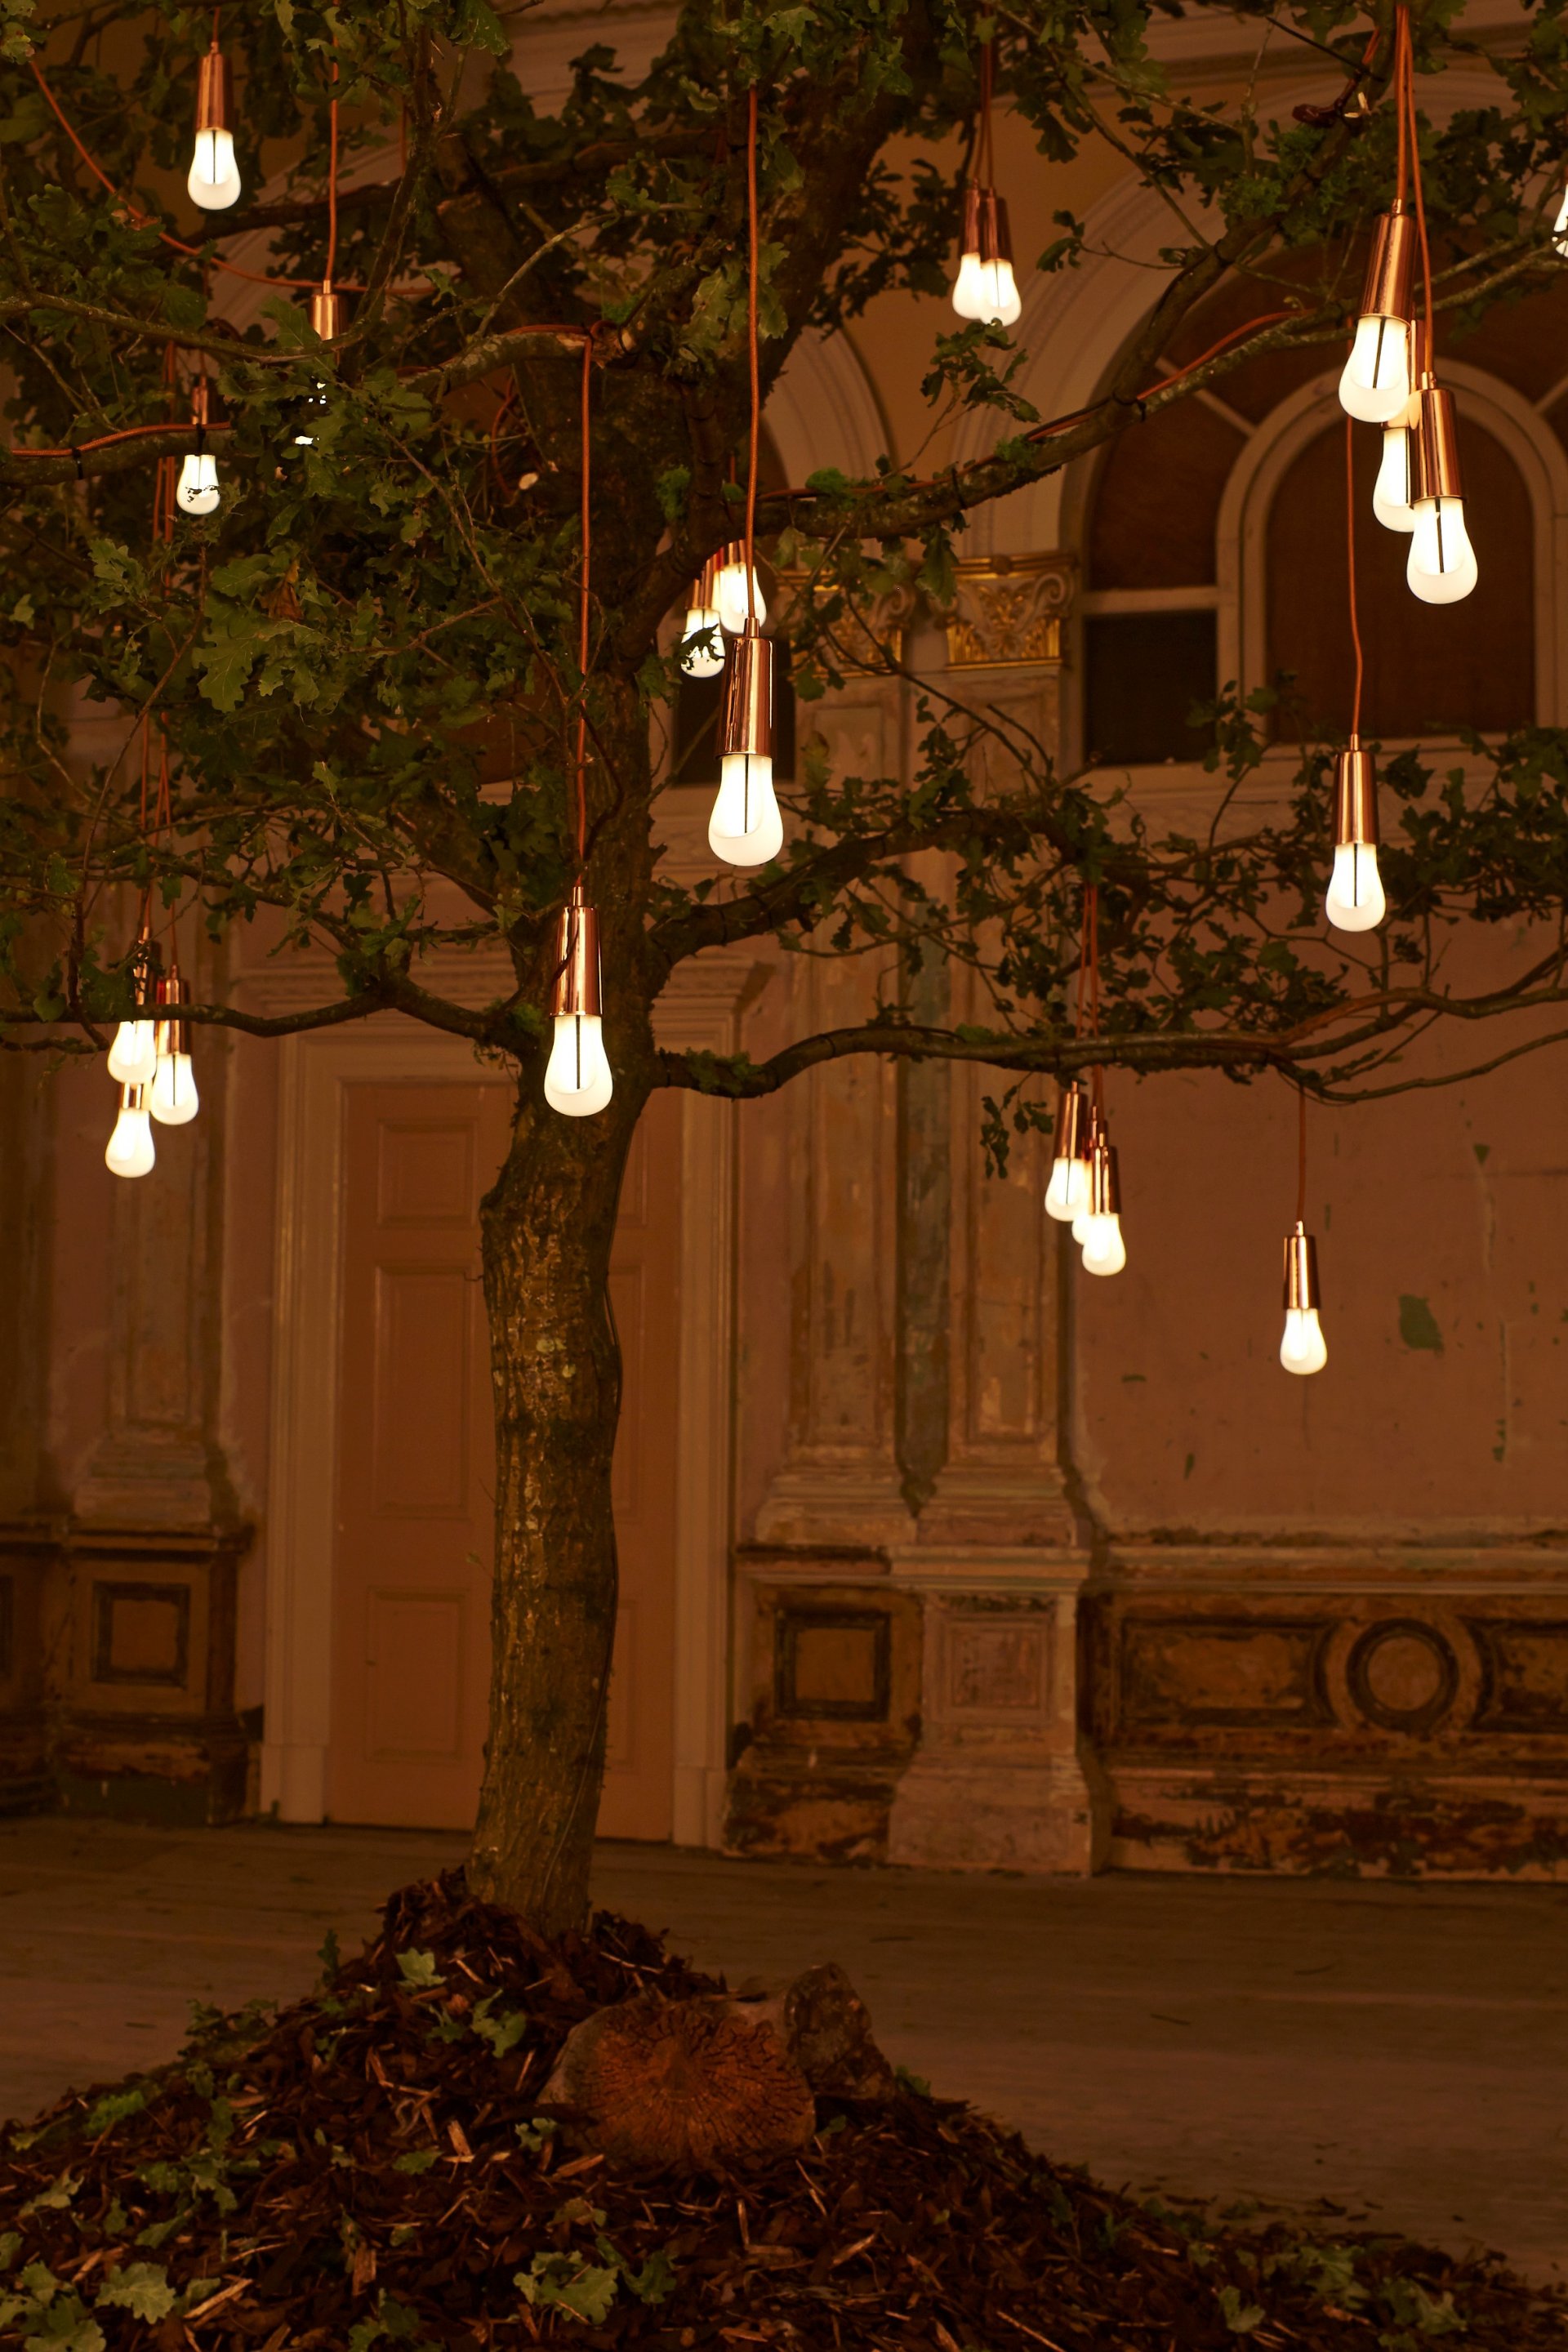 Plumen-Glowing-Oak-installation-at-Designersblock-2014-3 Glowing Oak Hulger